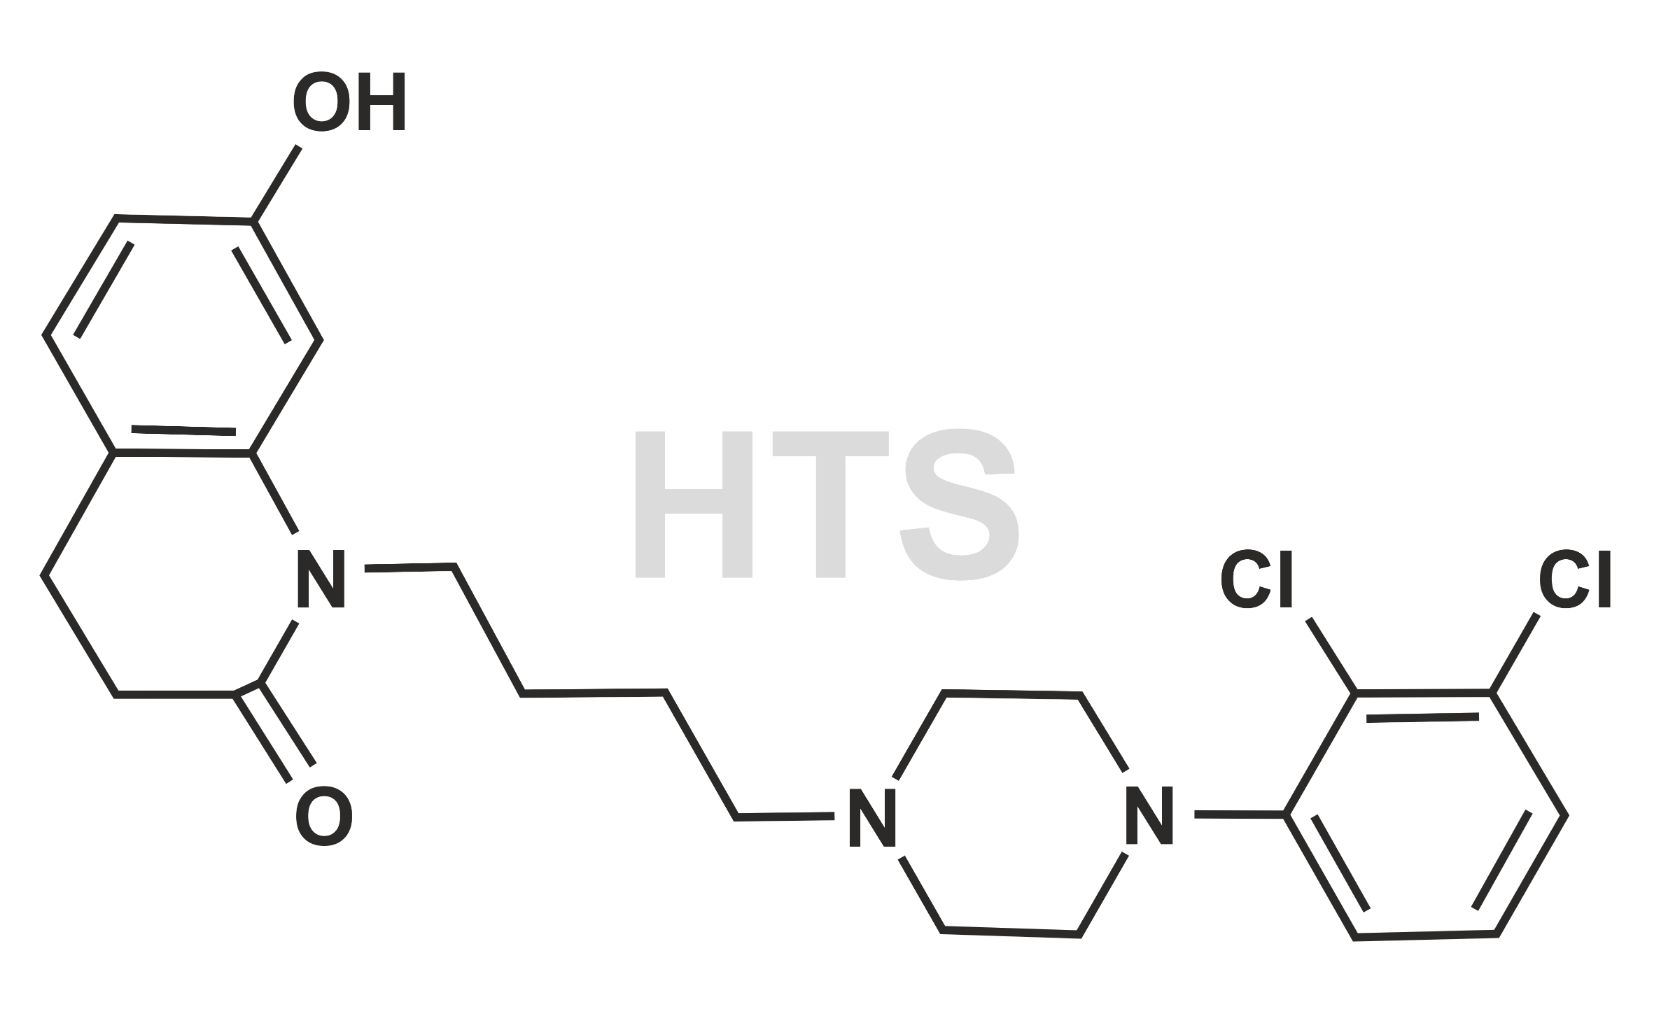 Aripiprazole N-Isomer